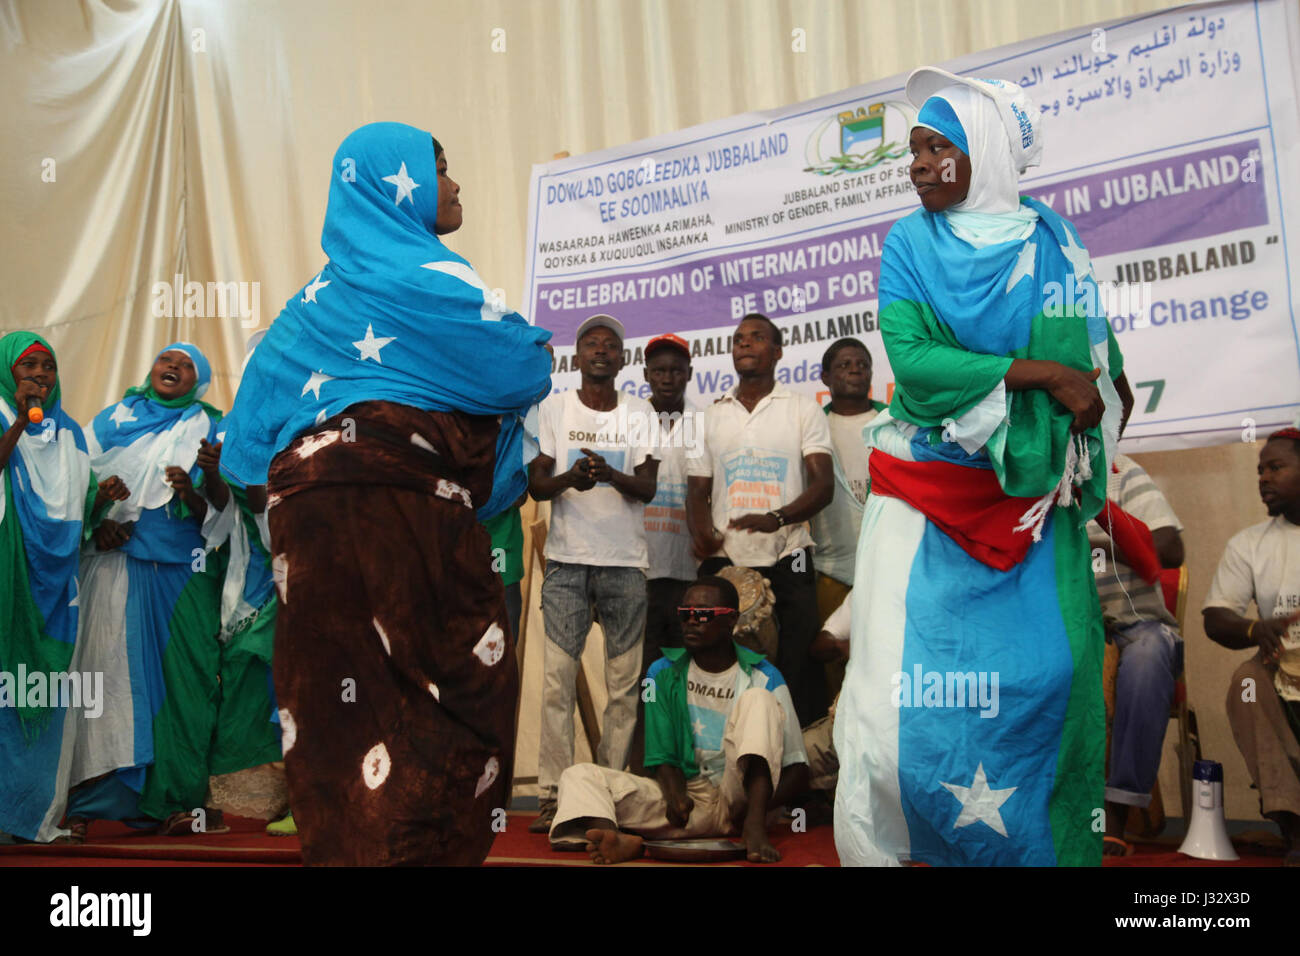 Residents of Kismayo, Somalia attend celebrations to mark International Women's Day on March 8, 2017. AMISOM Photo / Awil Abukar Stock Photo